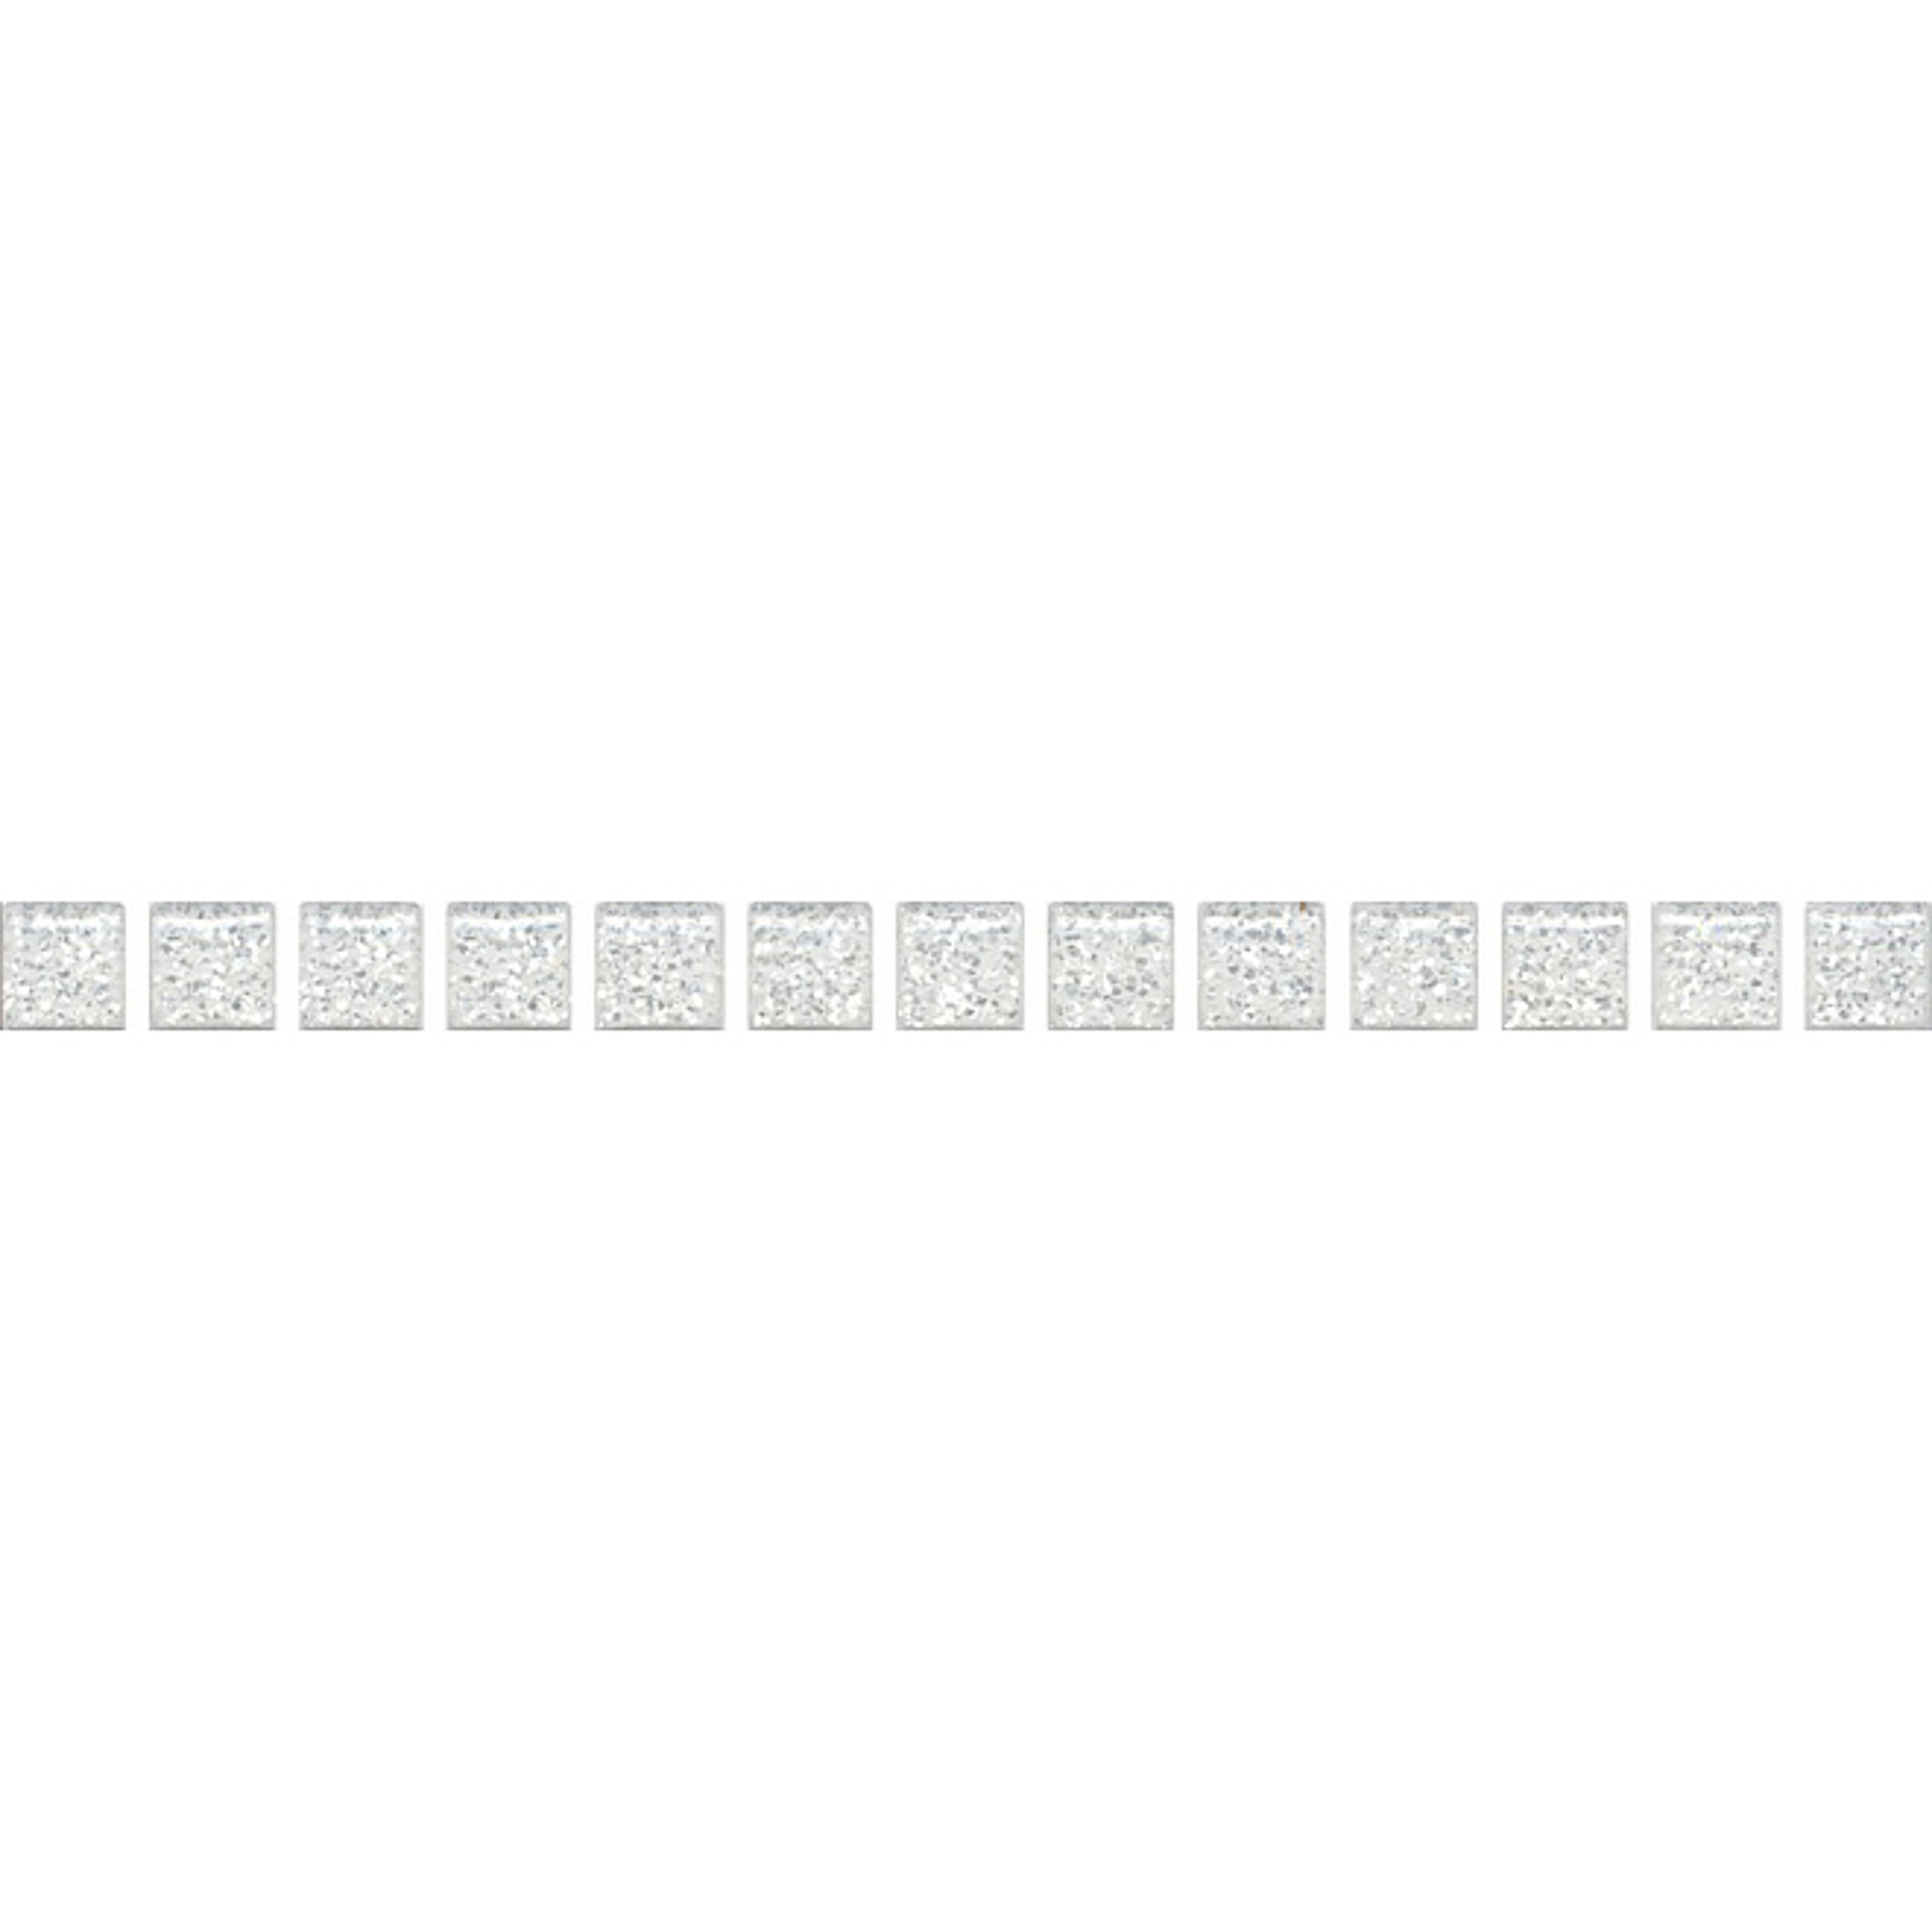 Бордюр Kerama Marazzi Бисер белый серебро 1,4x20 см POD001 подставка мишка 2 керамика серебро 18x20 см